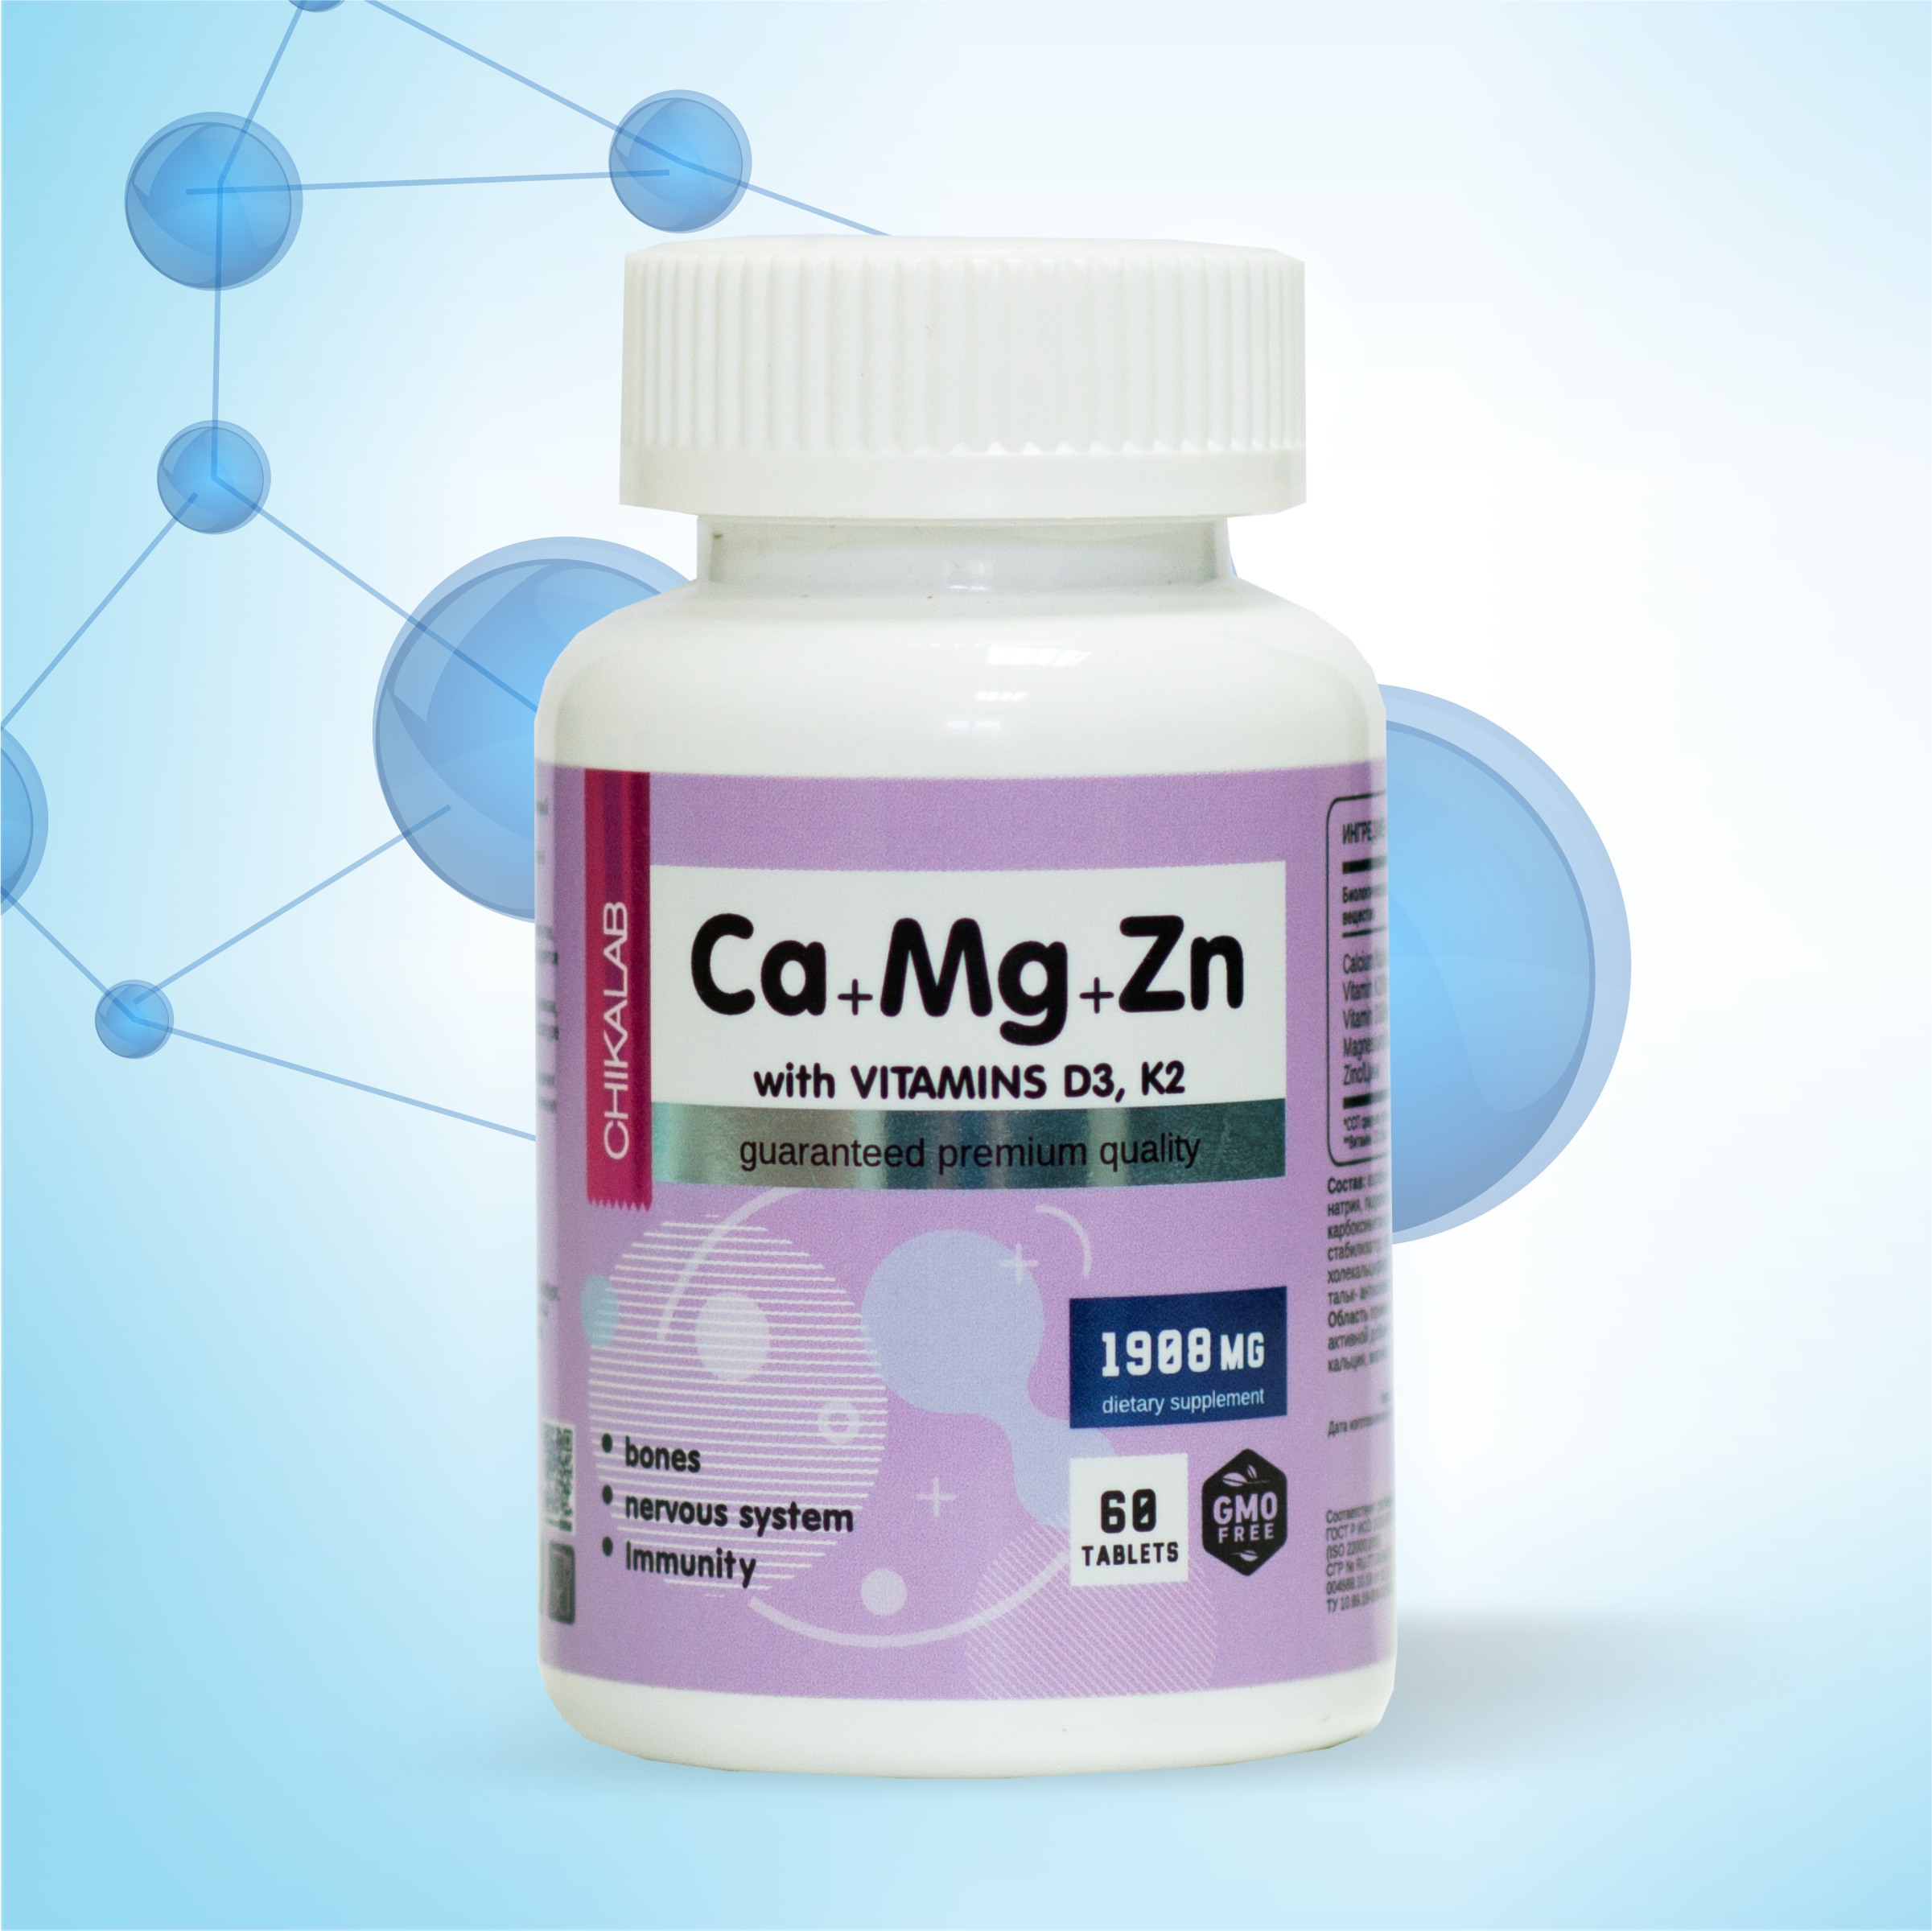 Д цинк одновременно можно. Кальций магний цинк д3 к2. Витамины кальций Магнезиум цинк д3. Вайтлайн кальций д3 к2. CA MG ZN витамины.